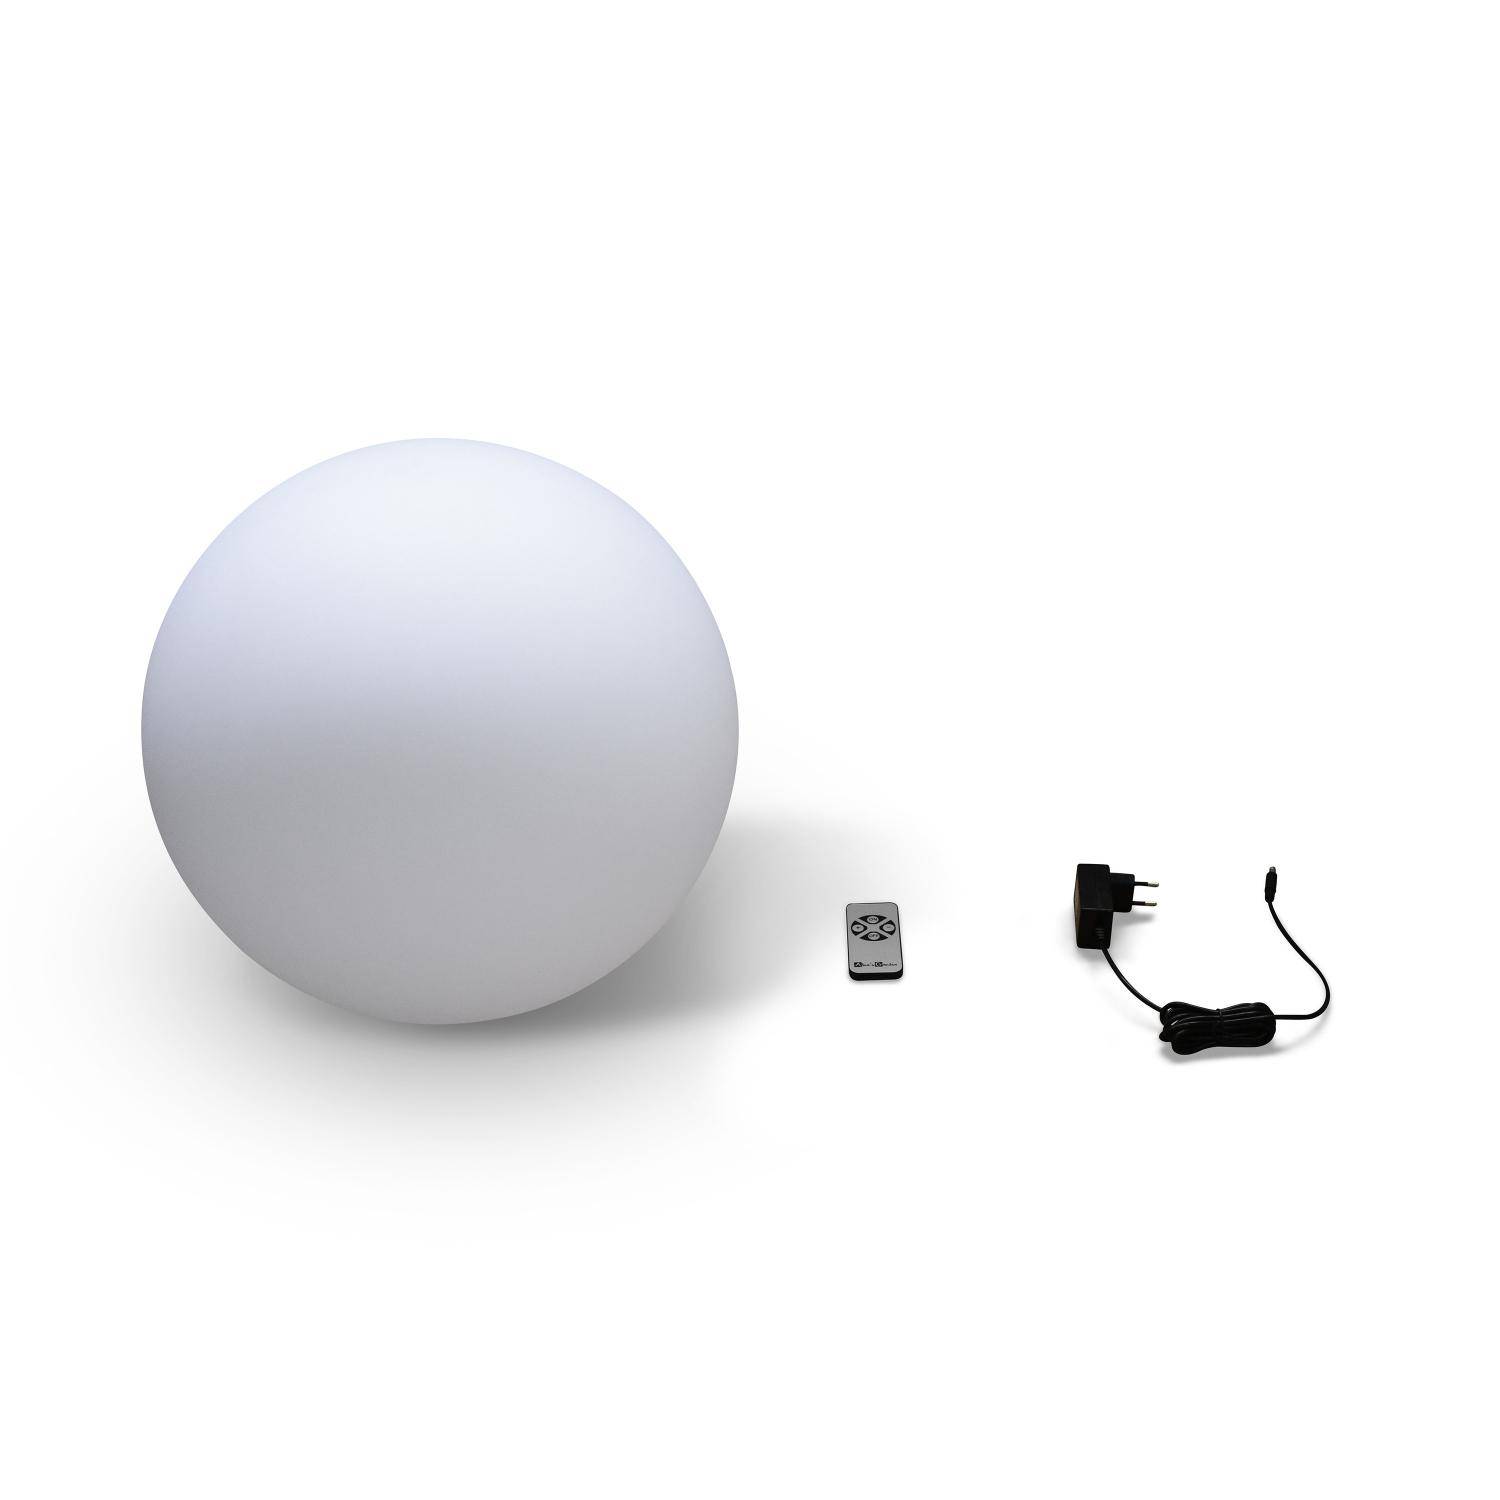 40cm spherical LED lamp – Decorative light sphere, remote control, Warm white Photo3